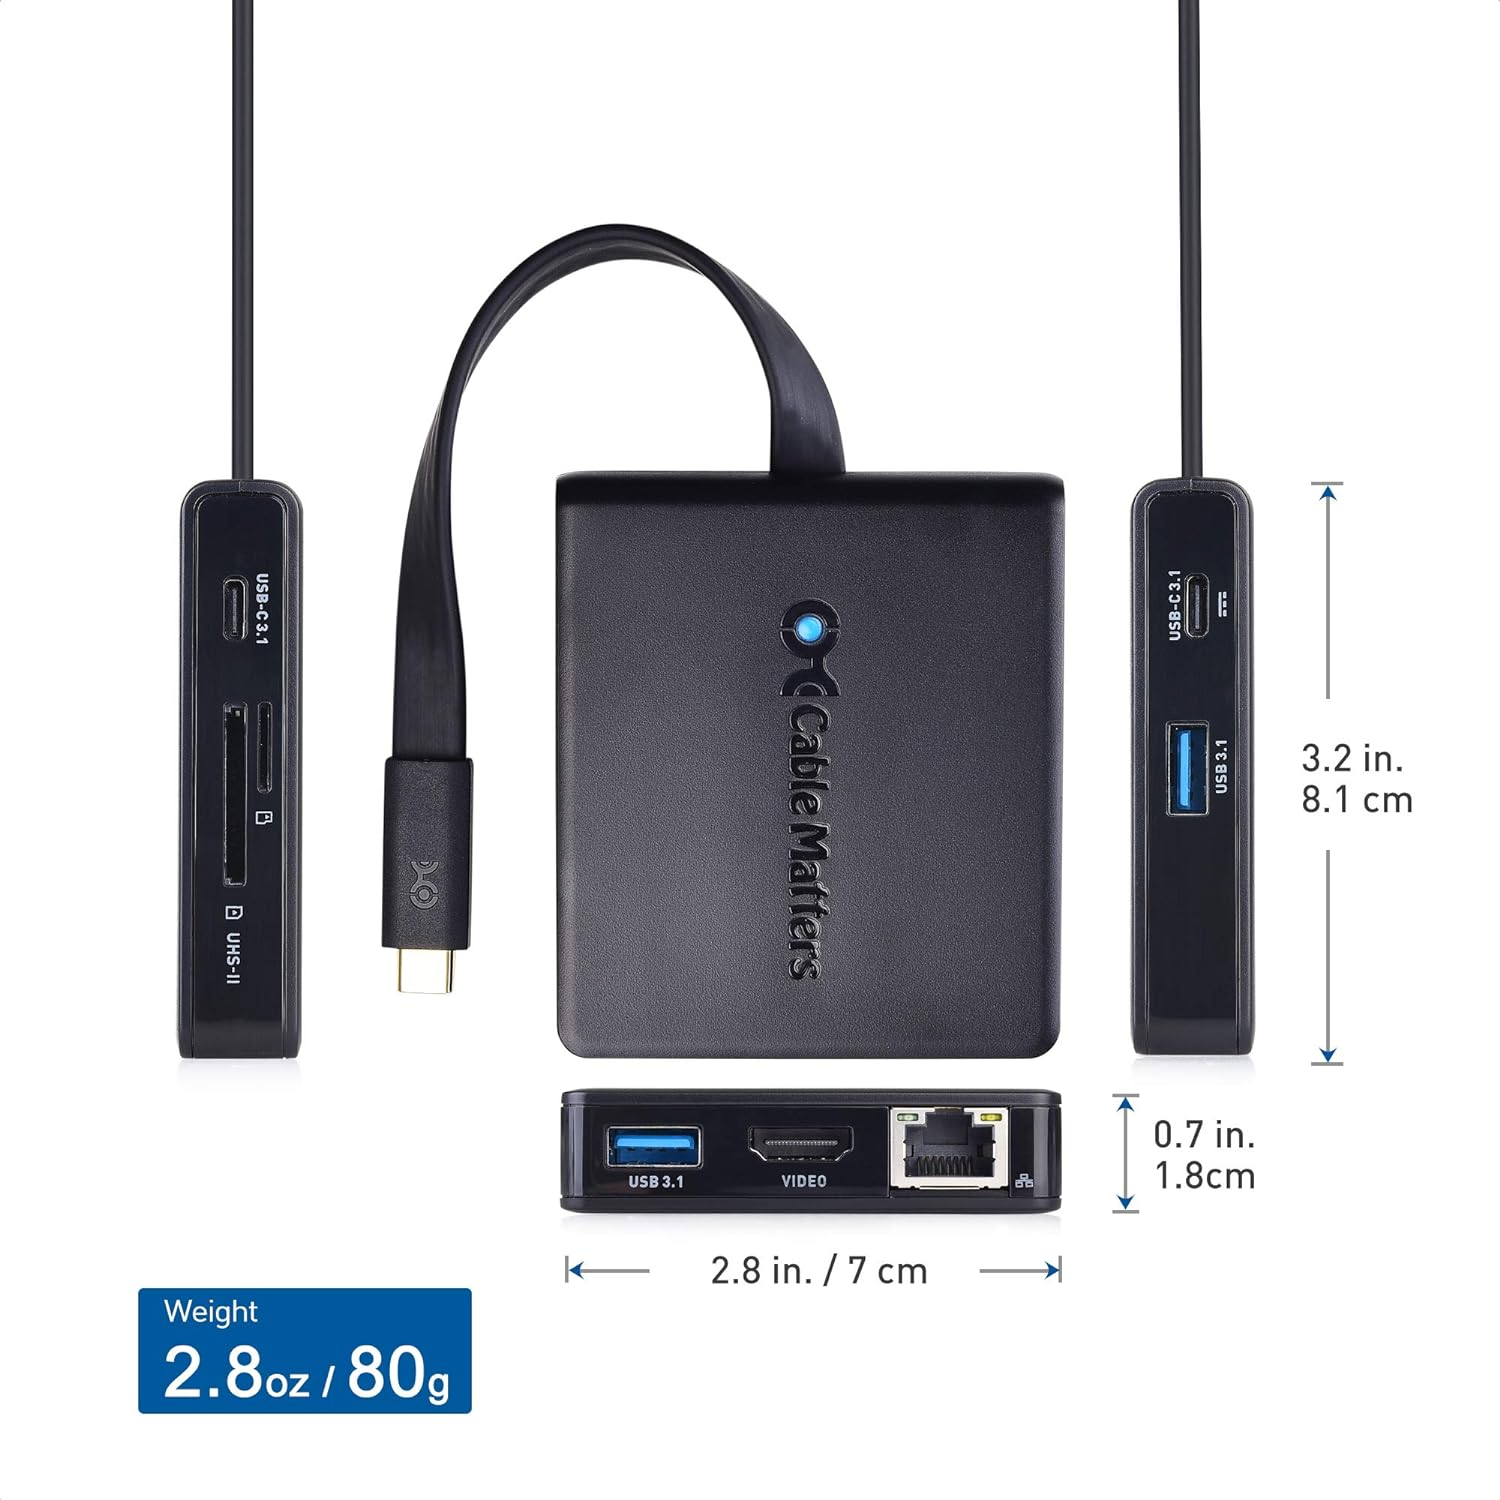 NewLink USB 3.1 Type C 4 Port HUB for Laptop/PC/Macbook 2 x C Type